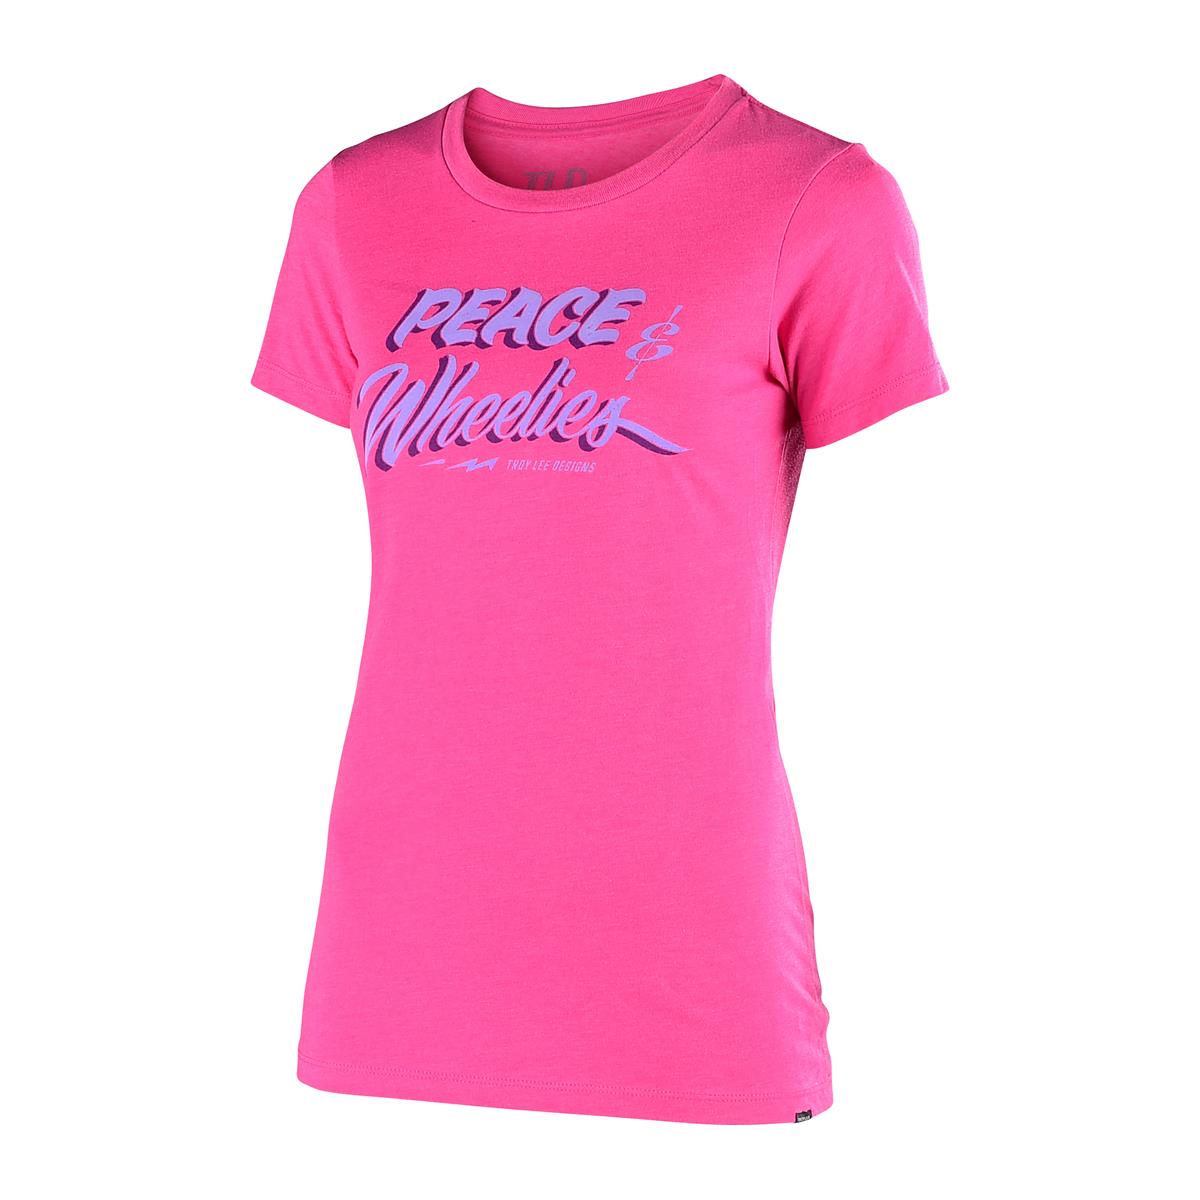 Troy Lee Designs Girls T-Shirt Peace & Wheelies Raspberry